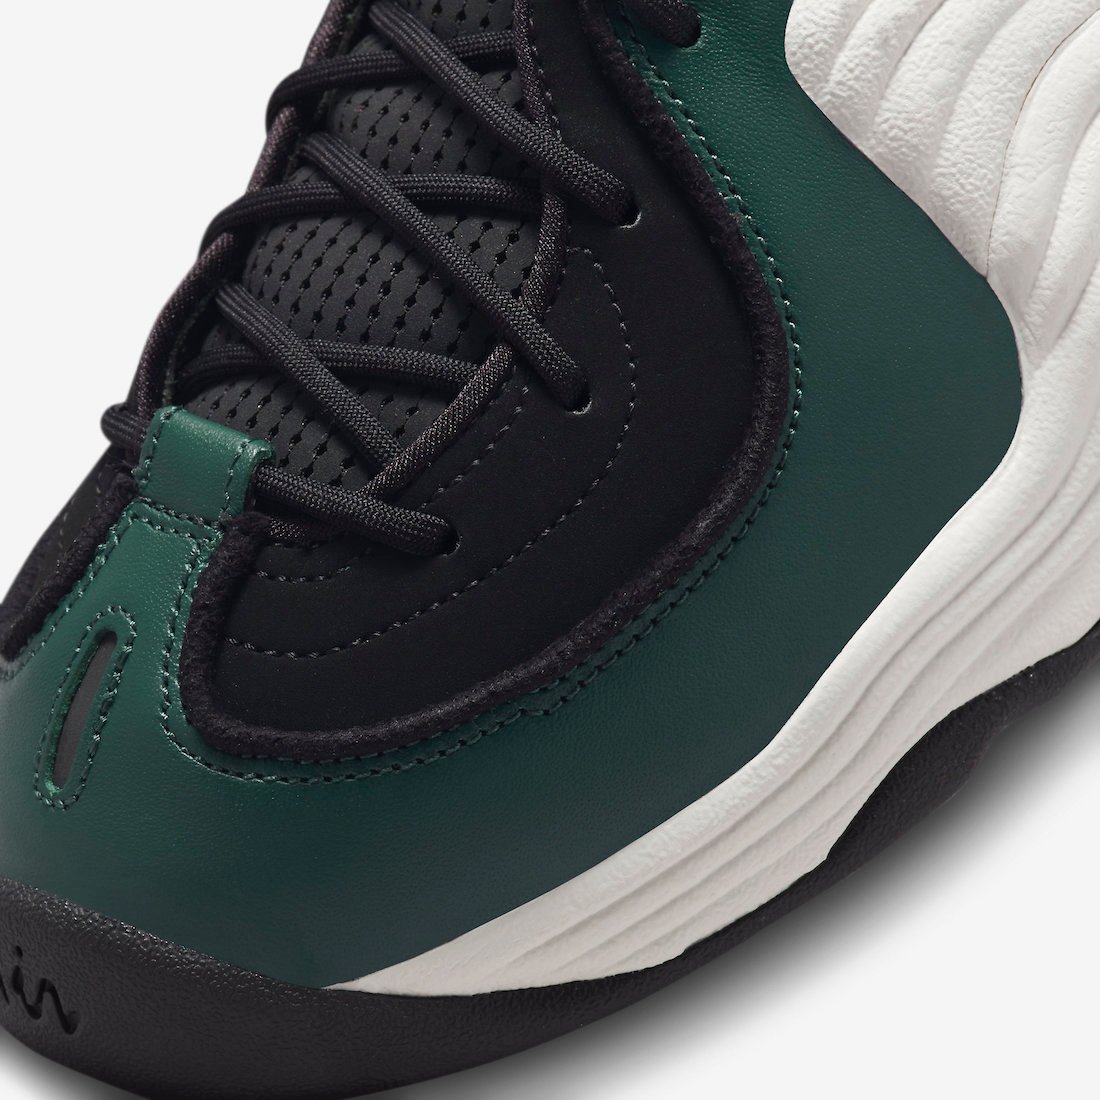 Nike Air Penny 2 Black Green DV3465-001 Release Date Info